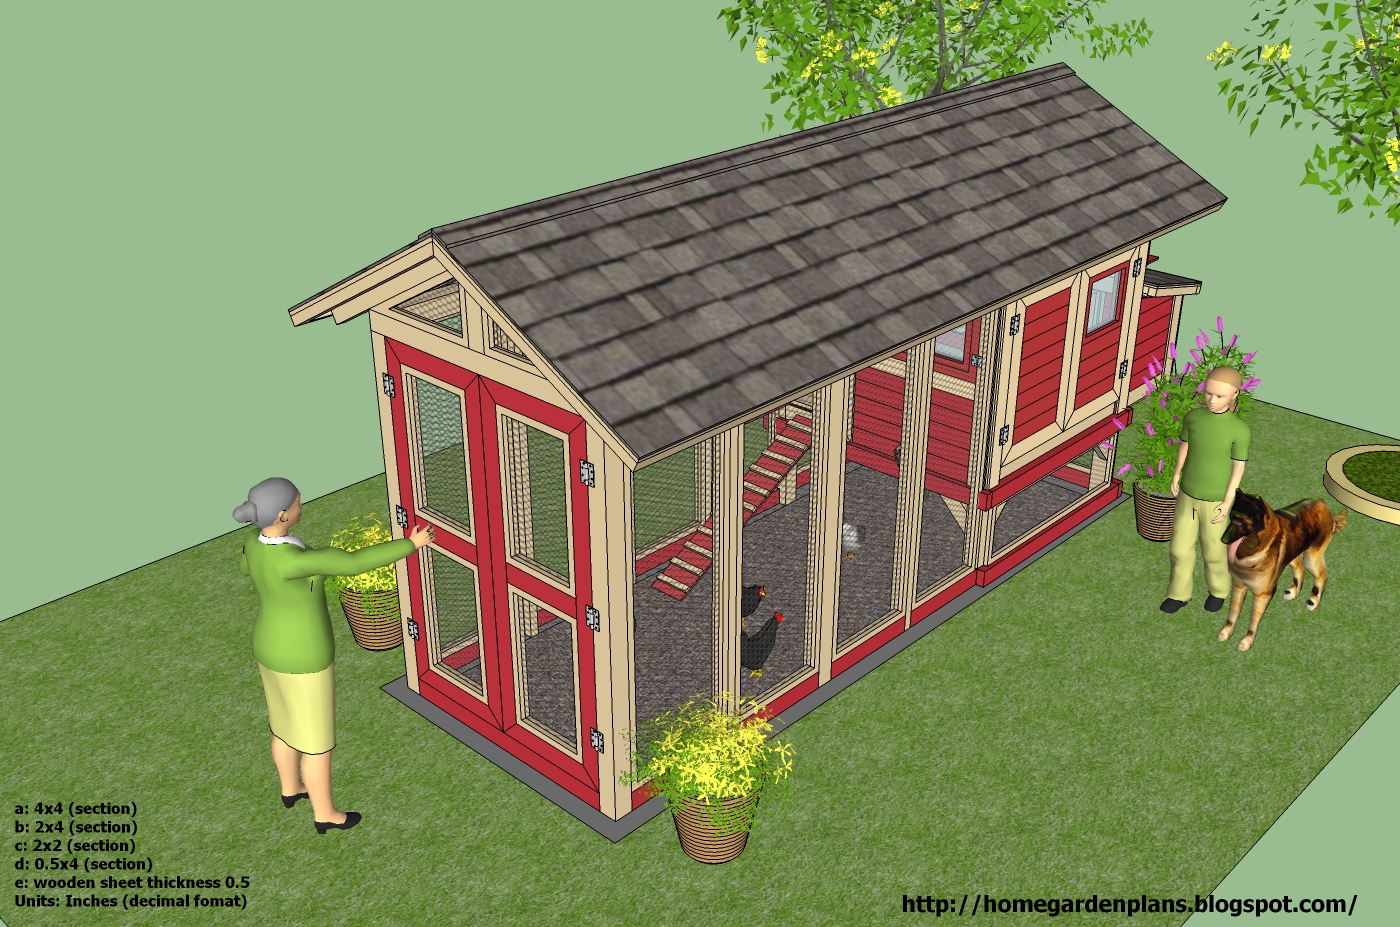 ... garden plans: M102 - Chicken Coop Plans - How to Build A Chicken Coop